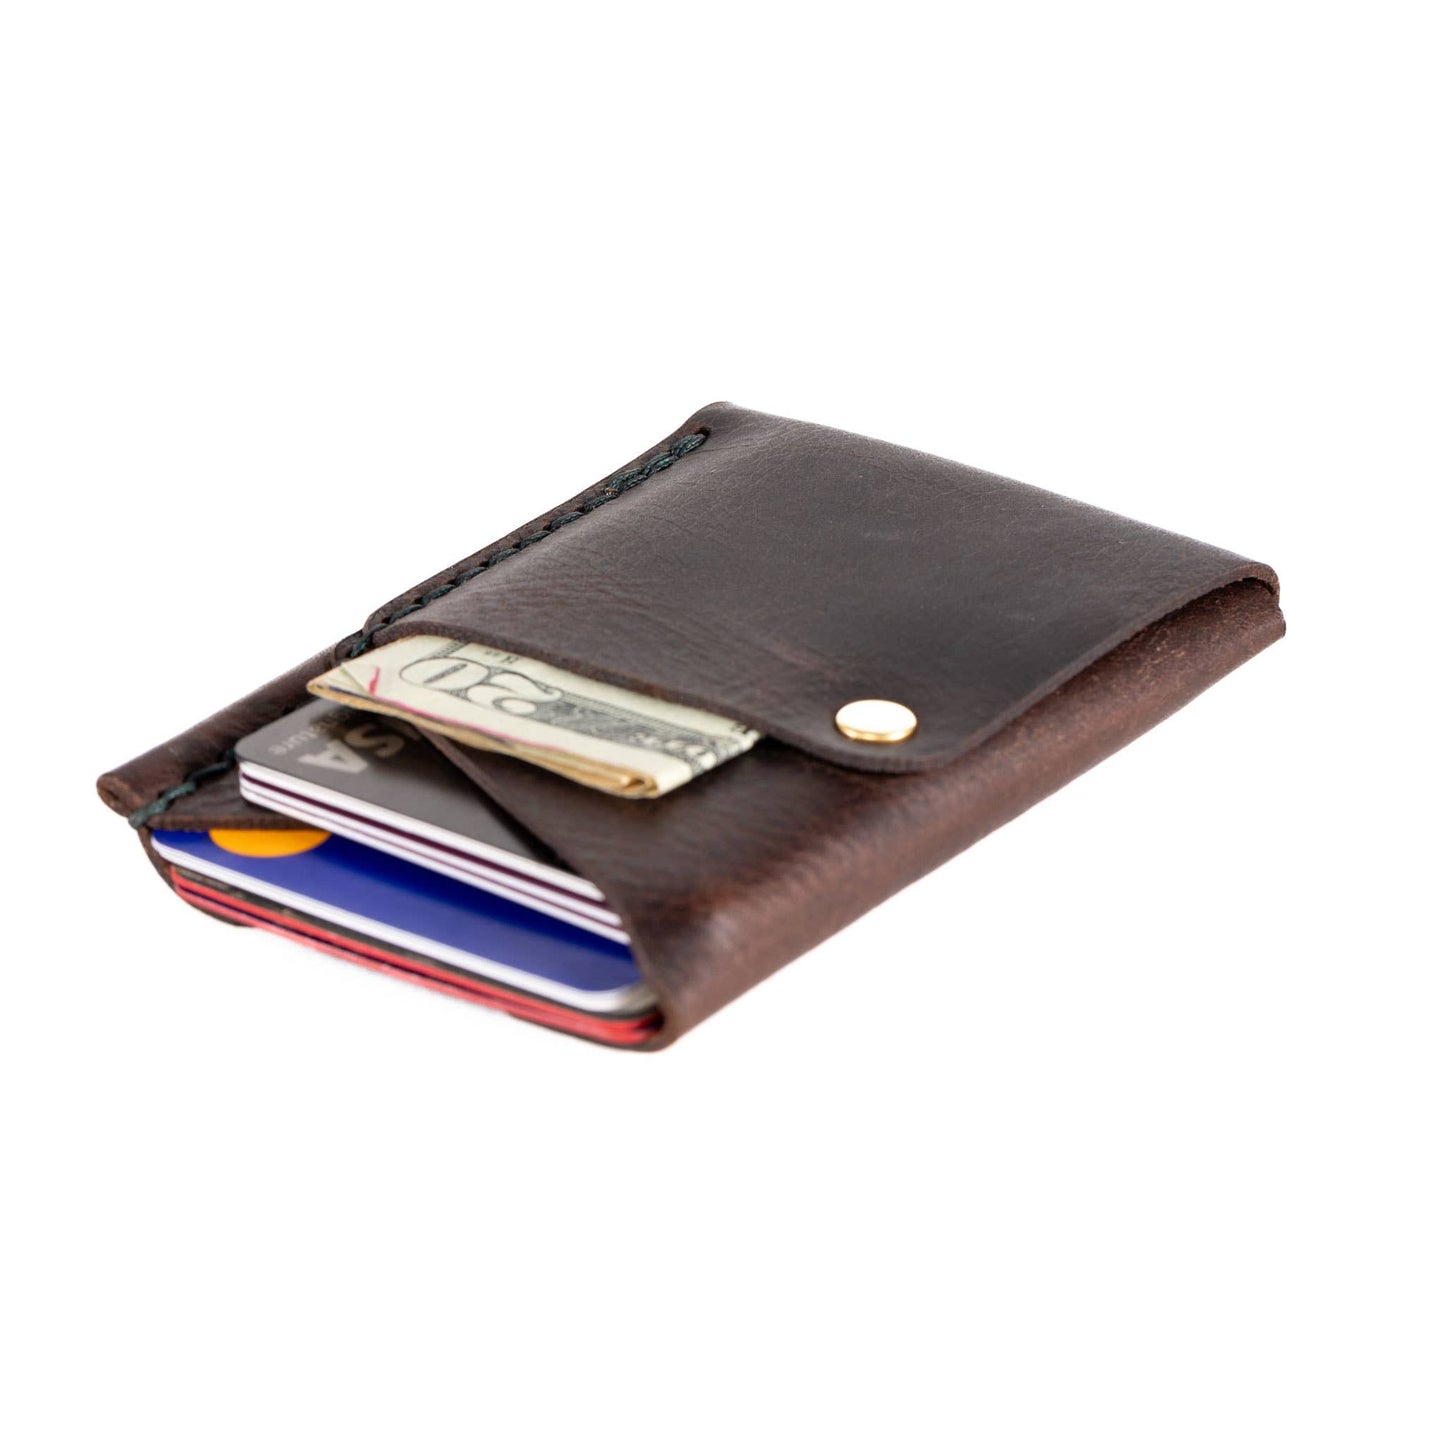 Big Spender Leather Wallet - Minimalist EDC